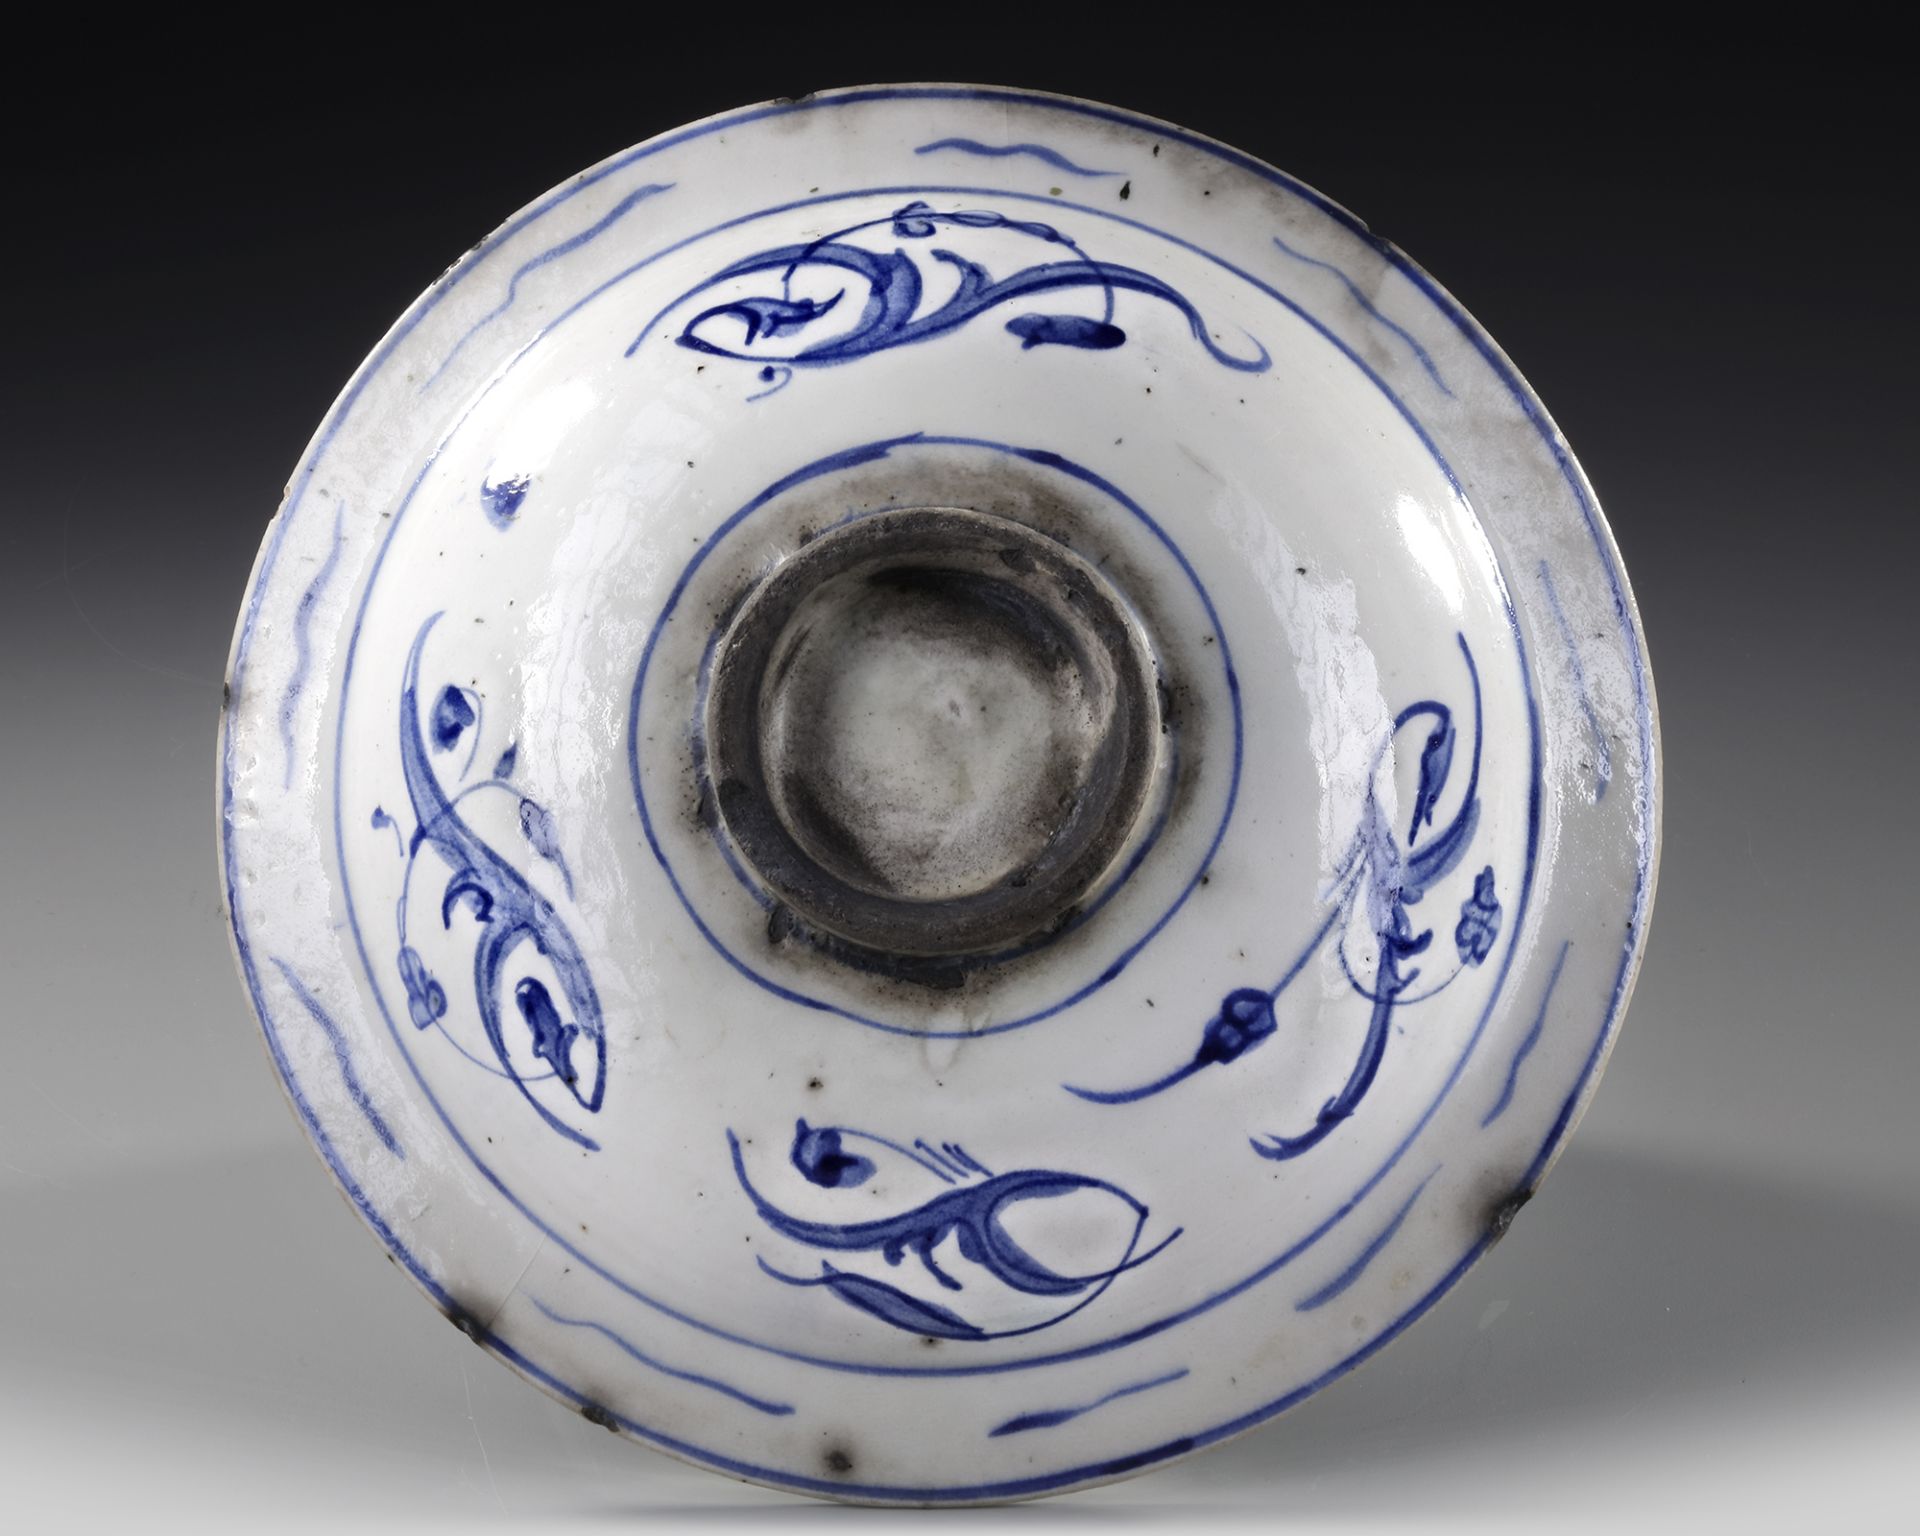 A SAFAVID BLUE AND WHITE POTTERY DISH, PERSIA, 16TH CENTURY - Bild 3 aus 3